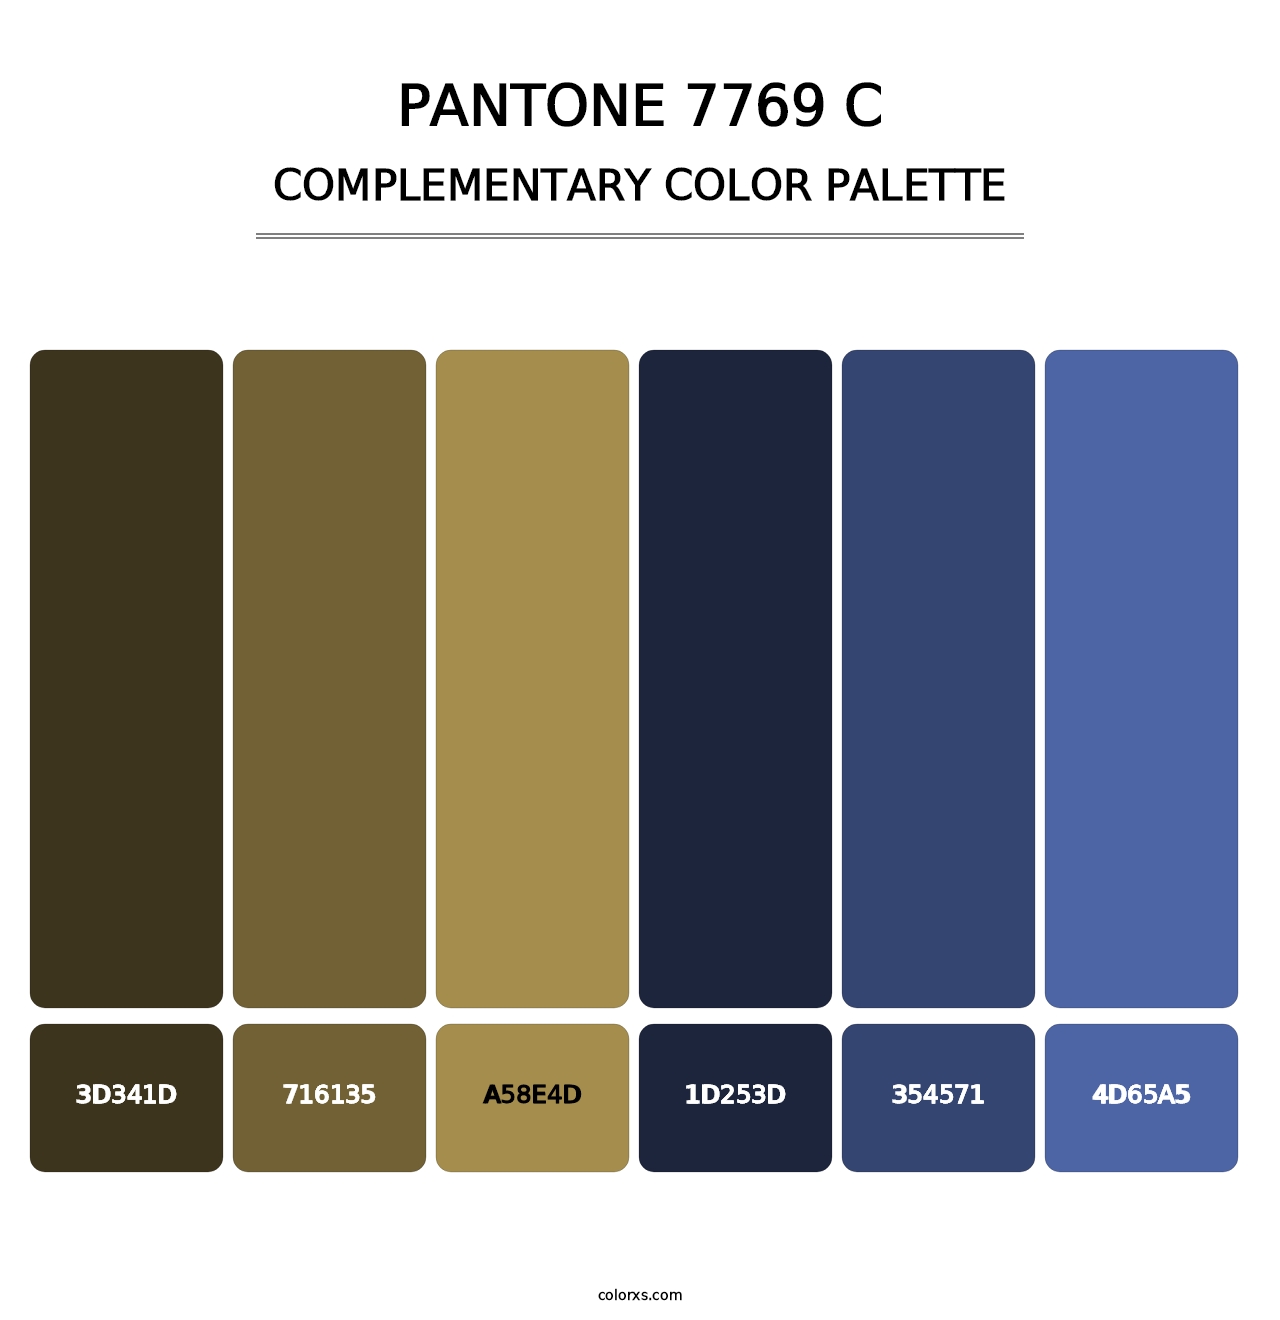 PANTONE 7769 C - Complementary Color Palette